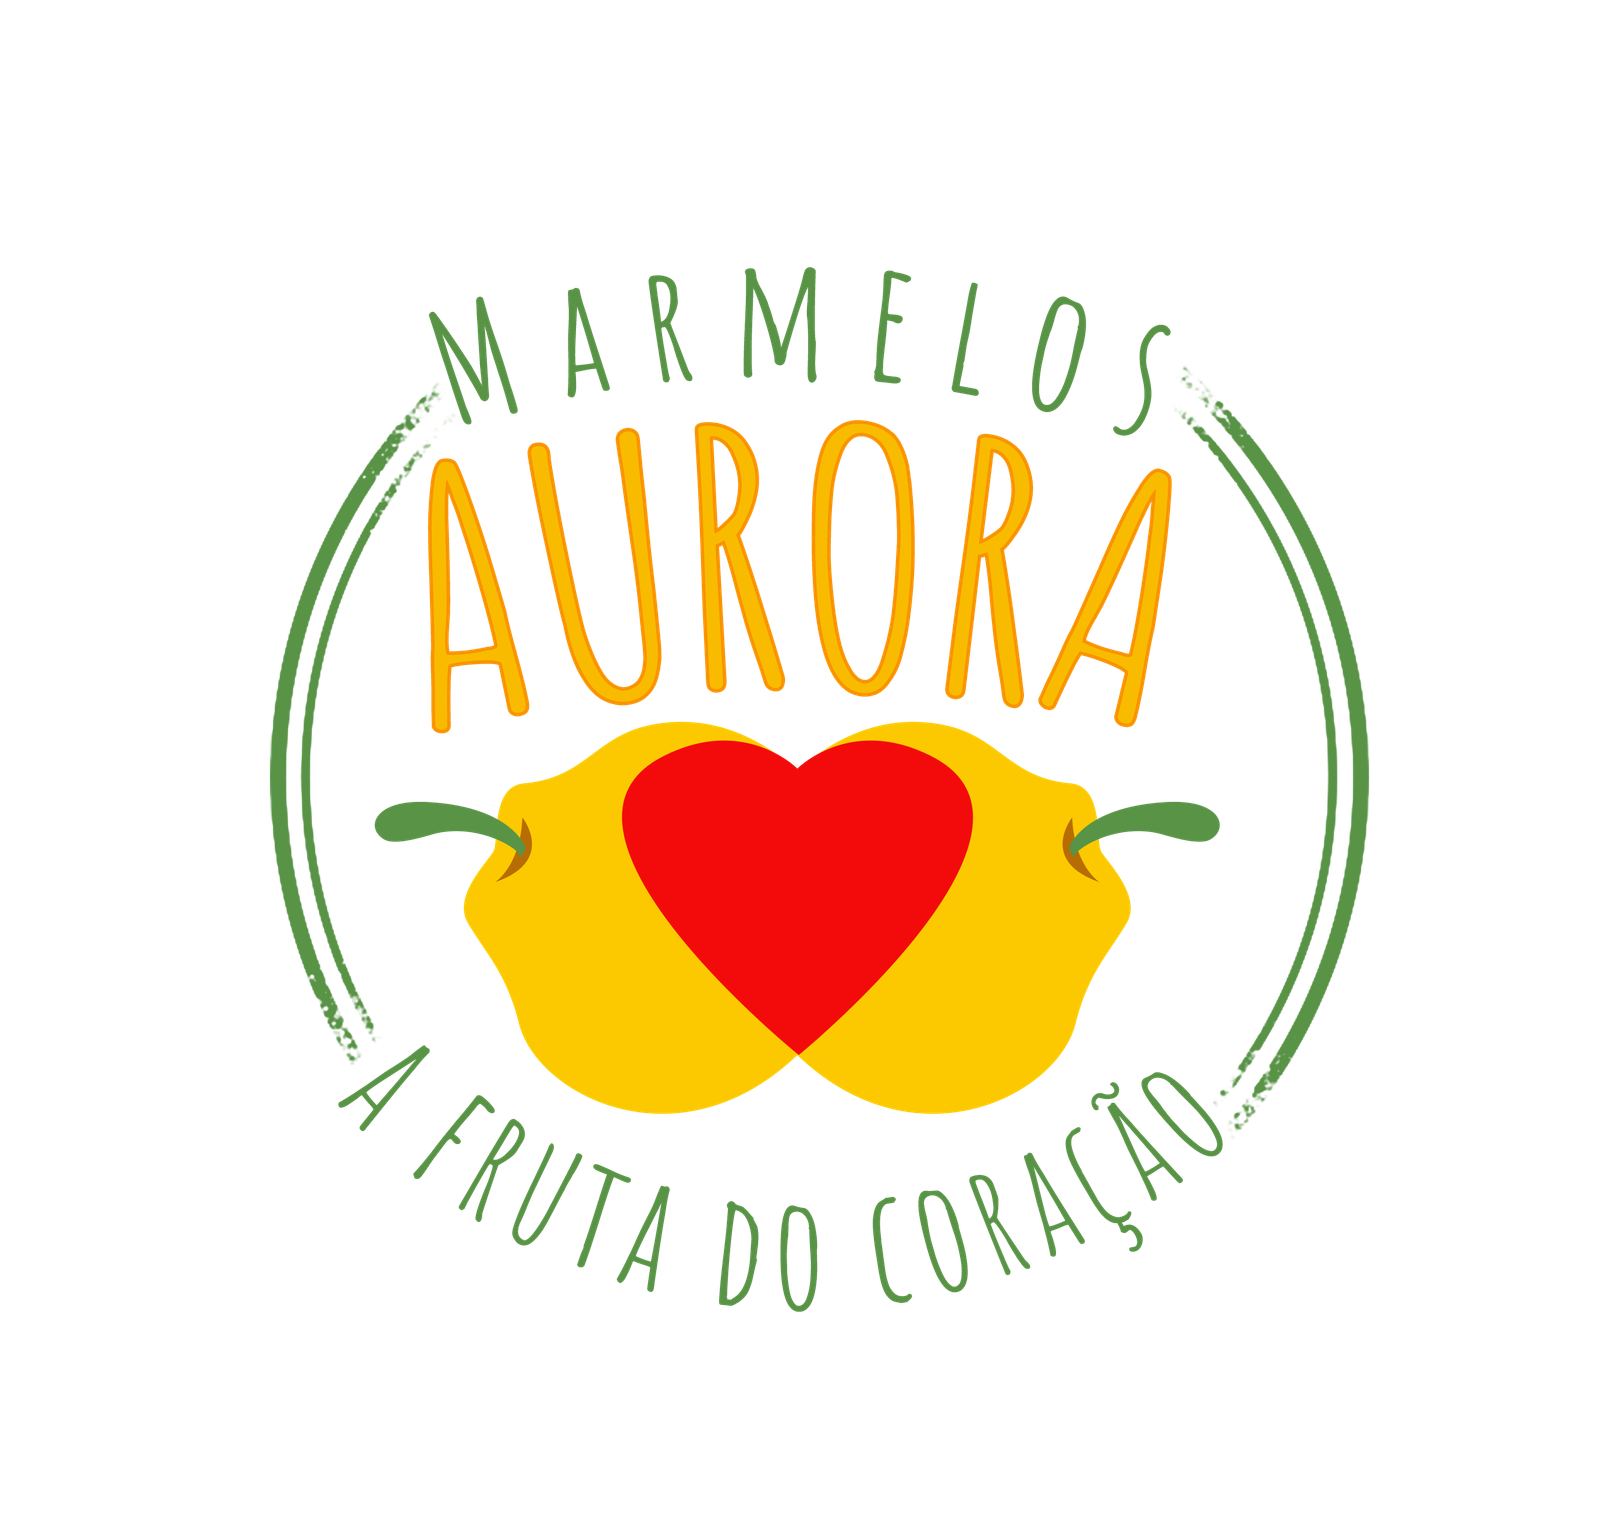 Marmelos Aurora